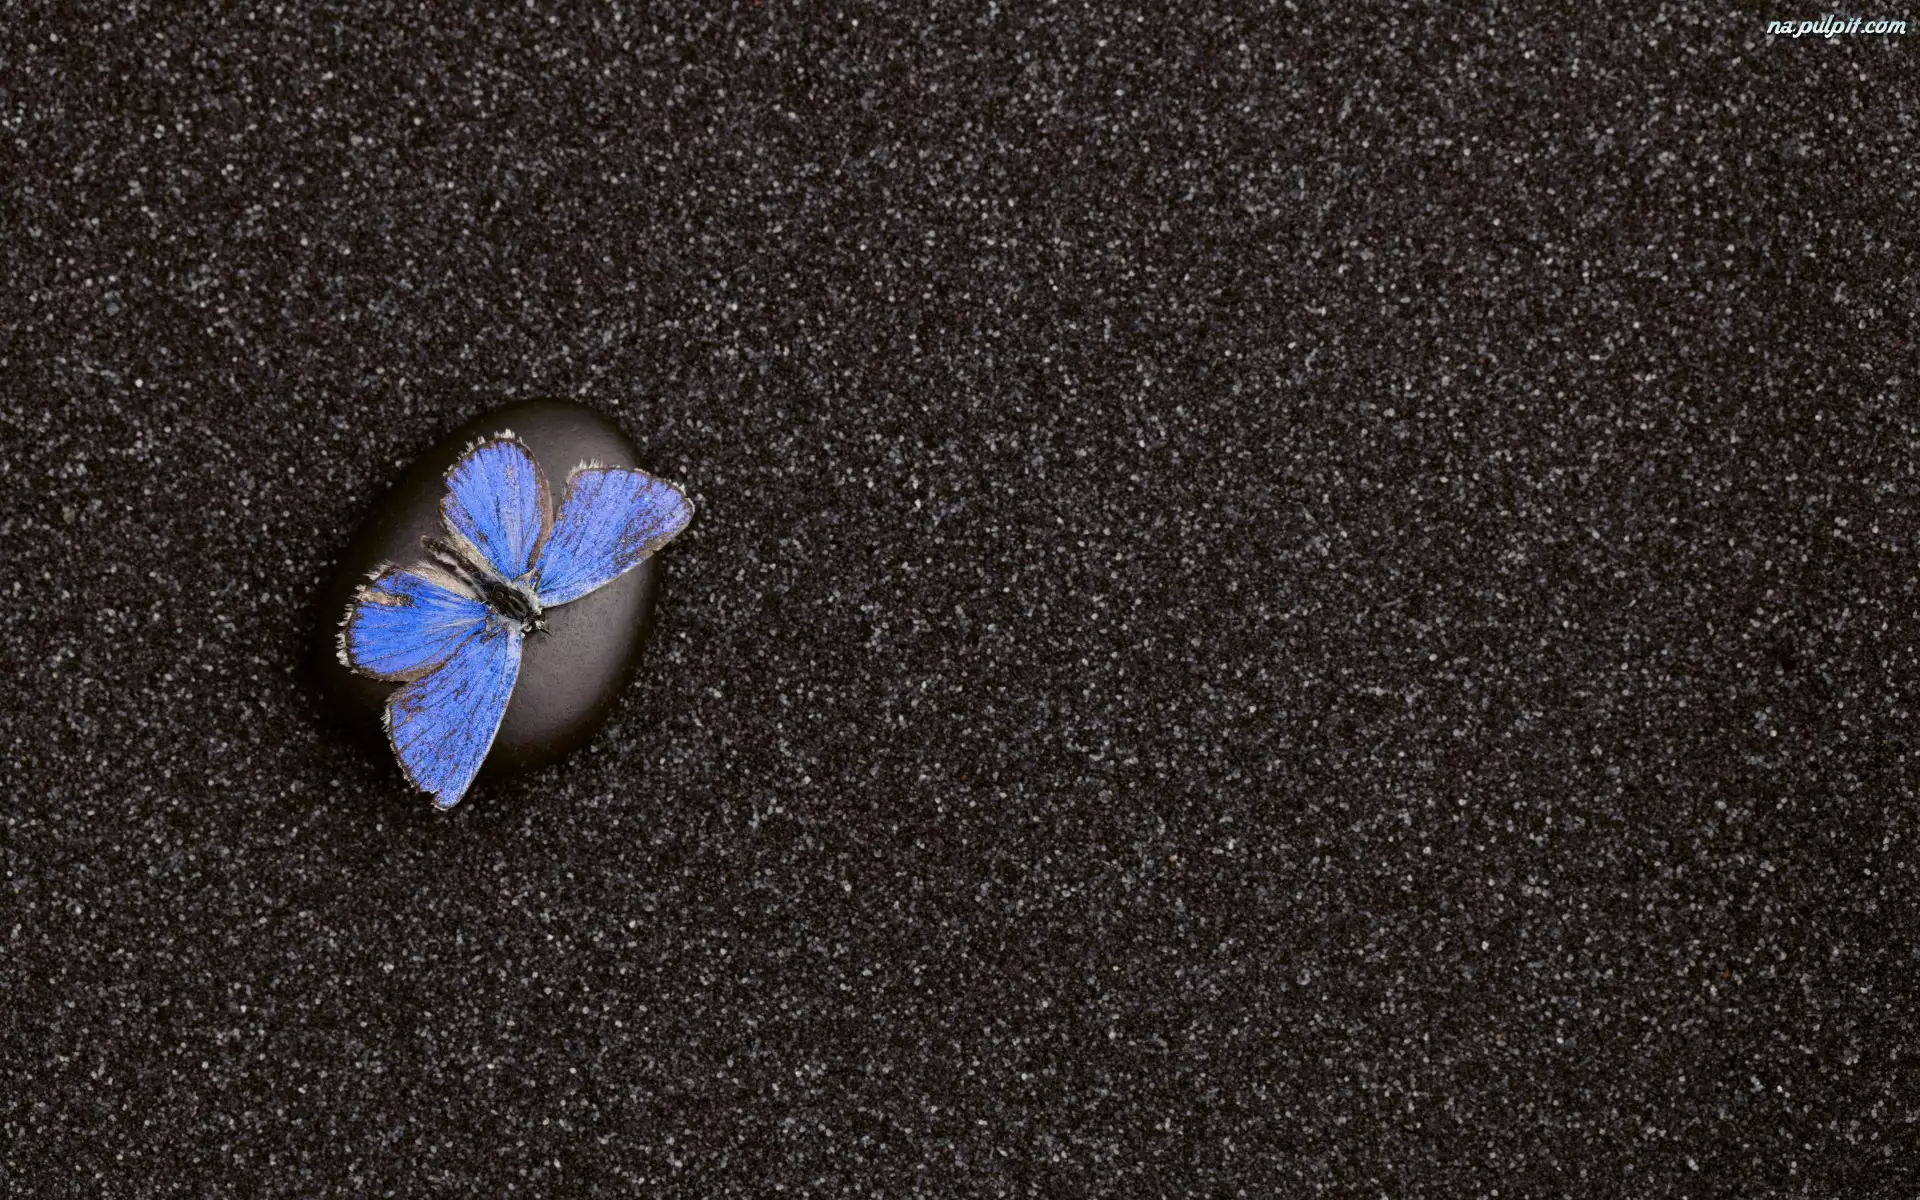 Modraszek ikar, Kamień, Motyl